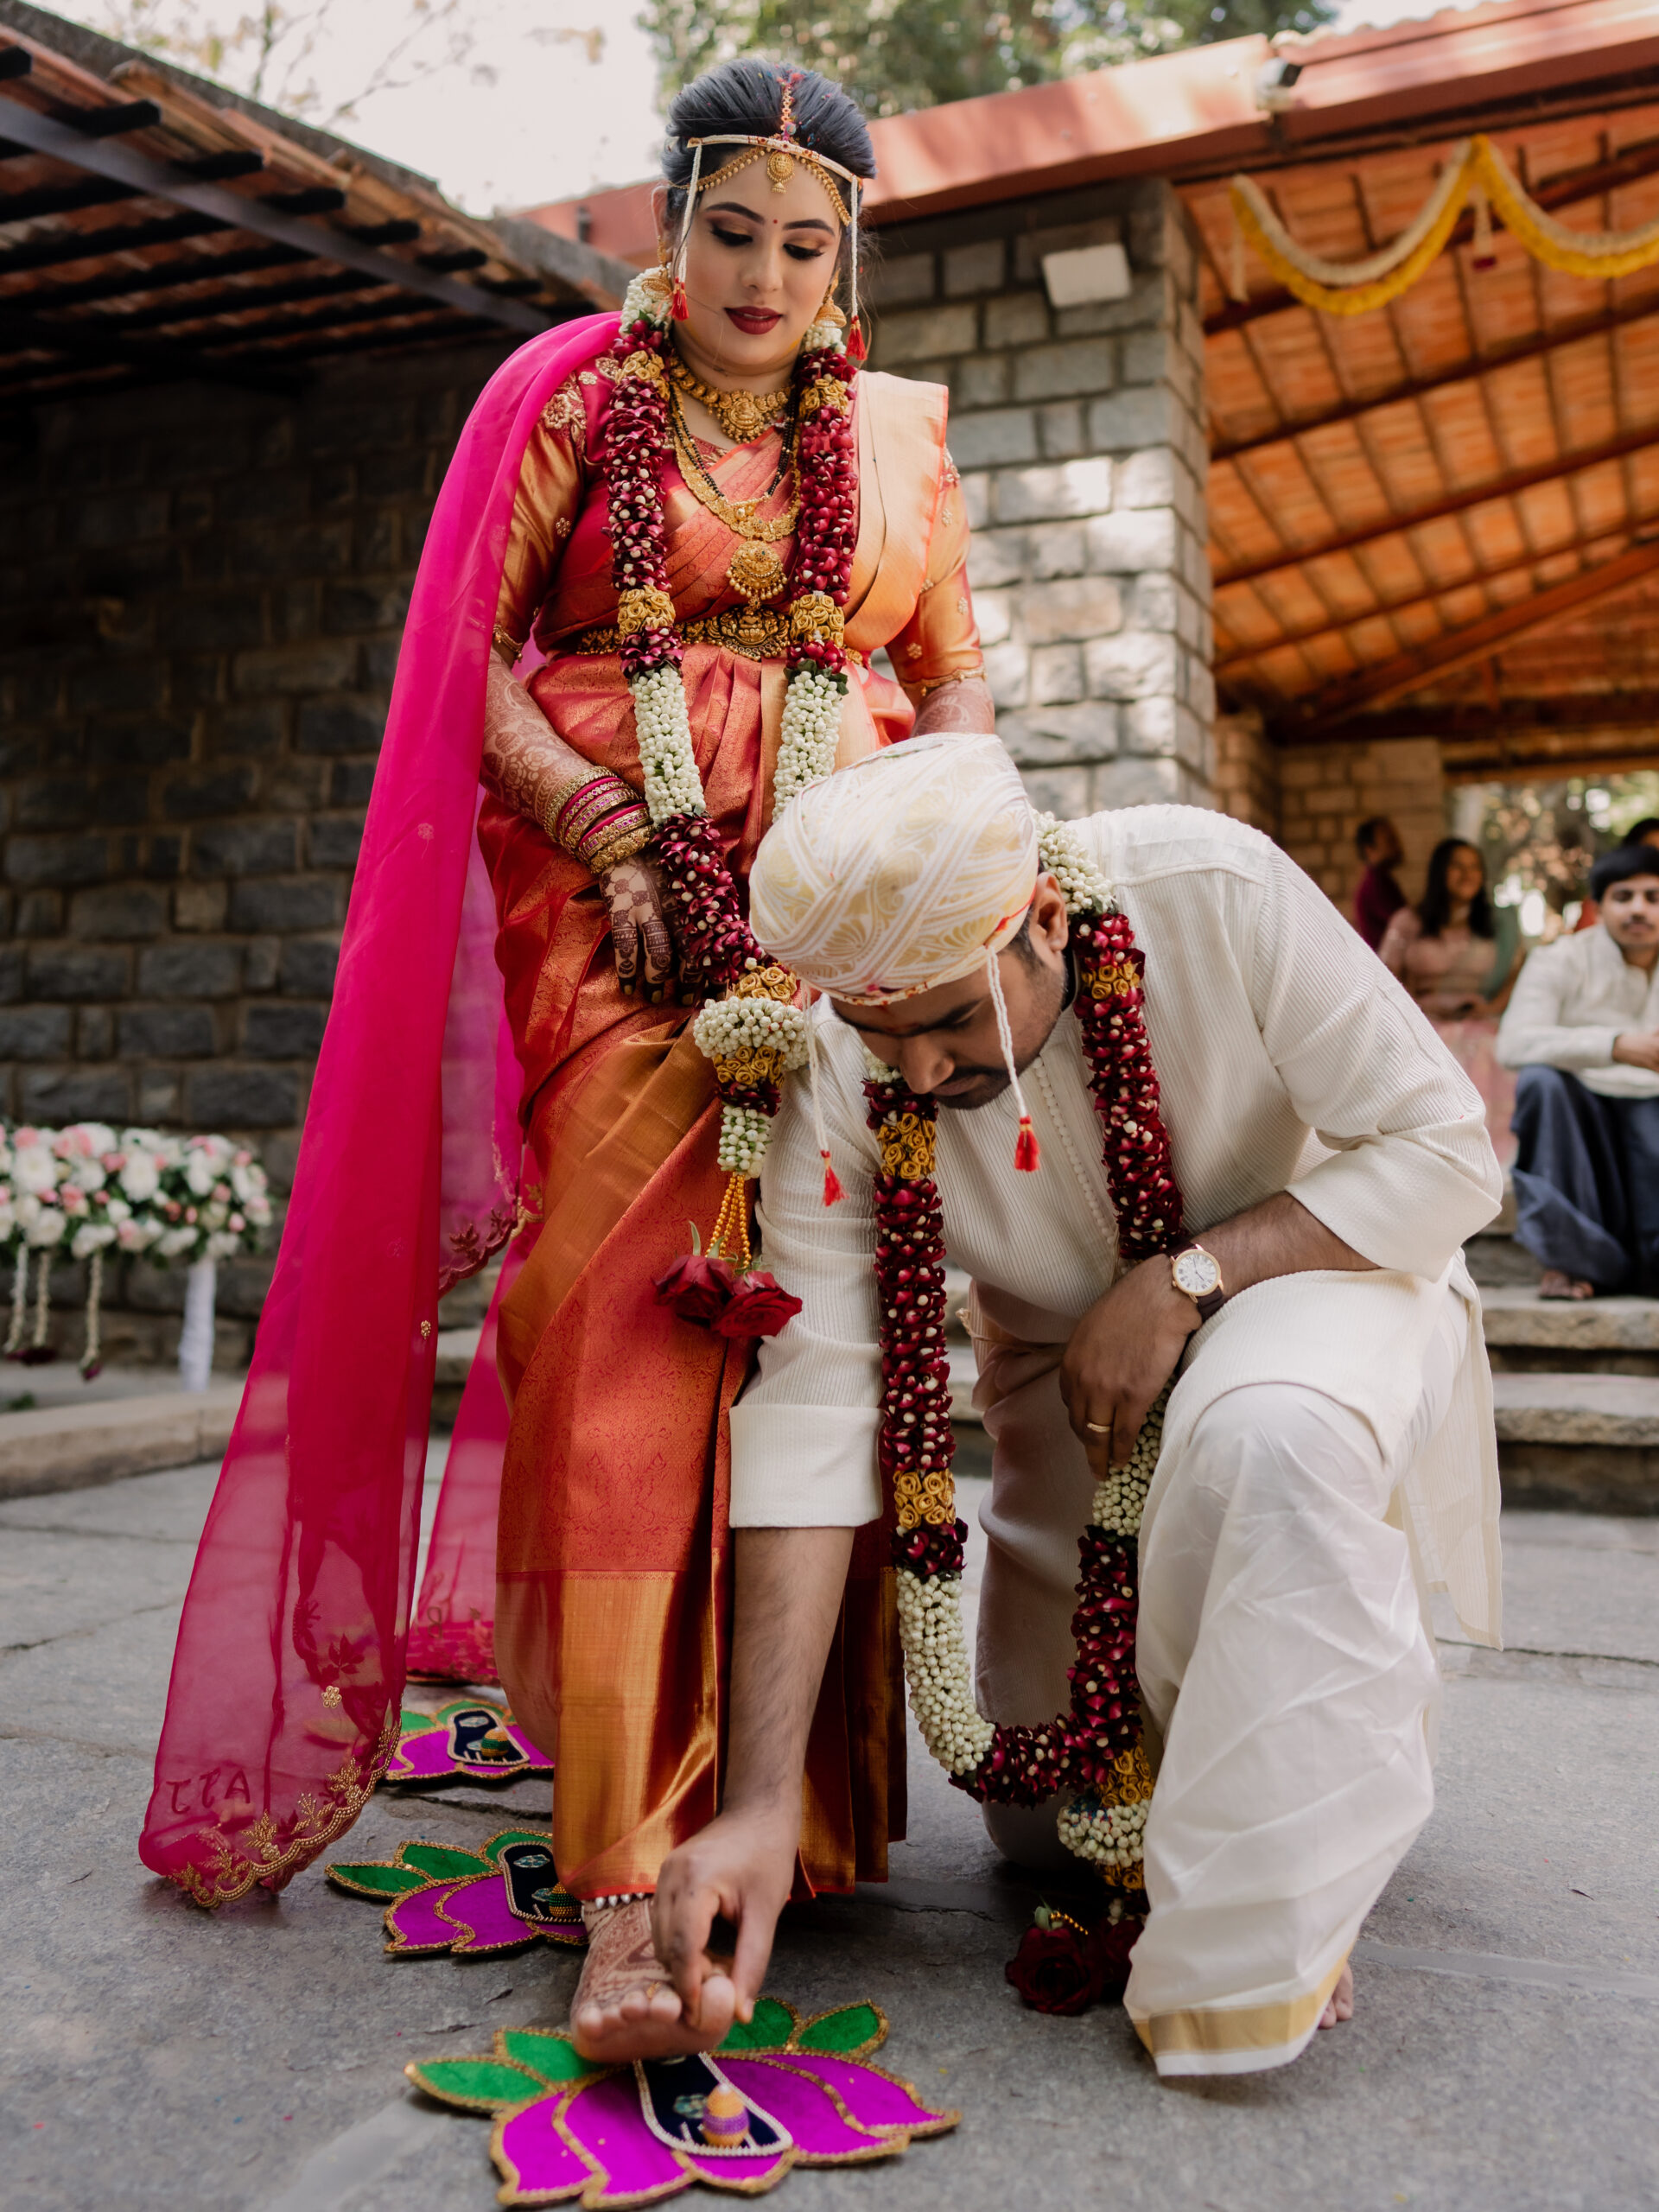 Kannada wedding ritual , ceremony and attire